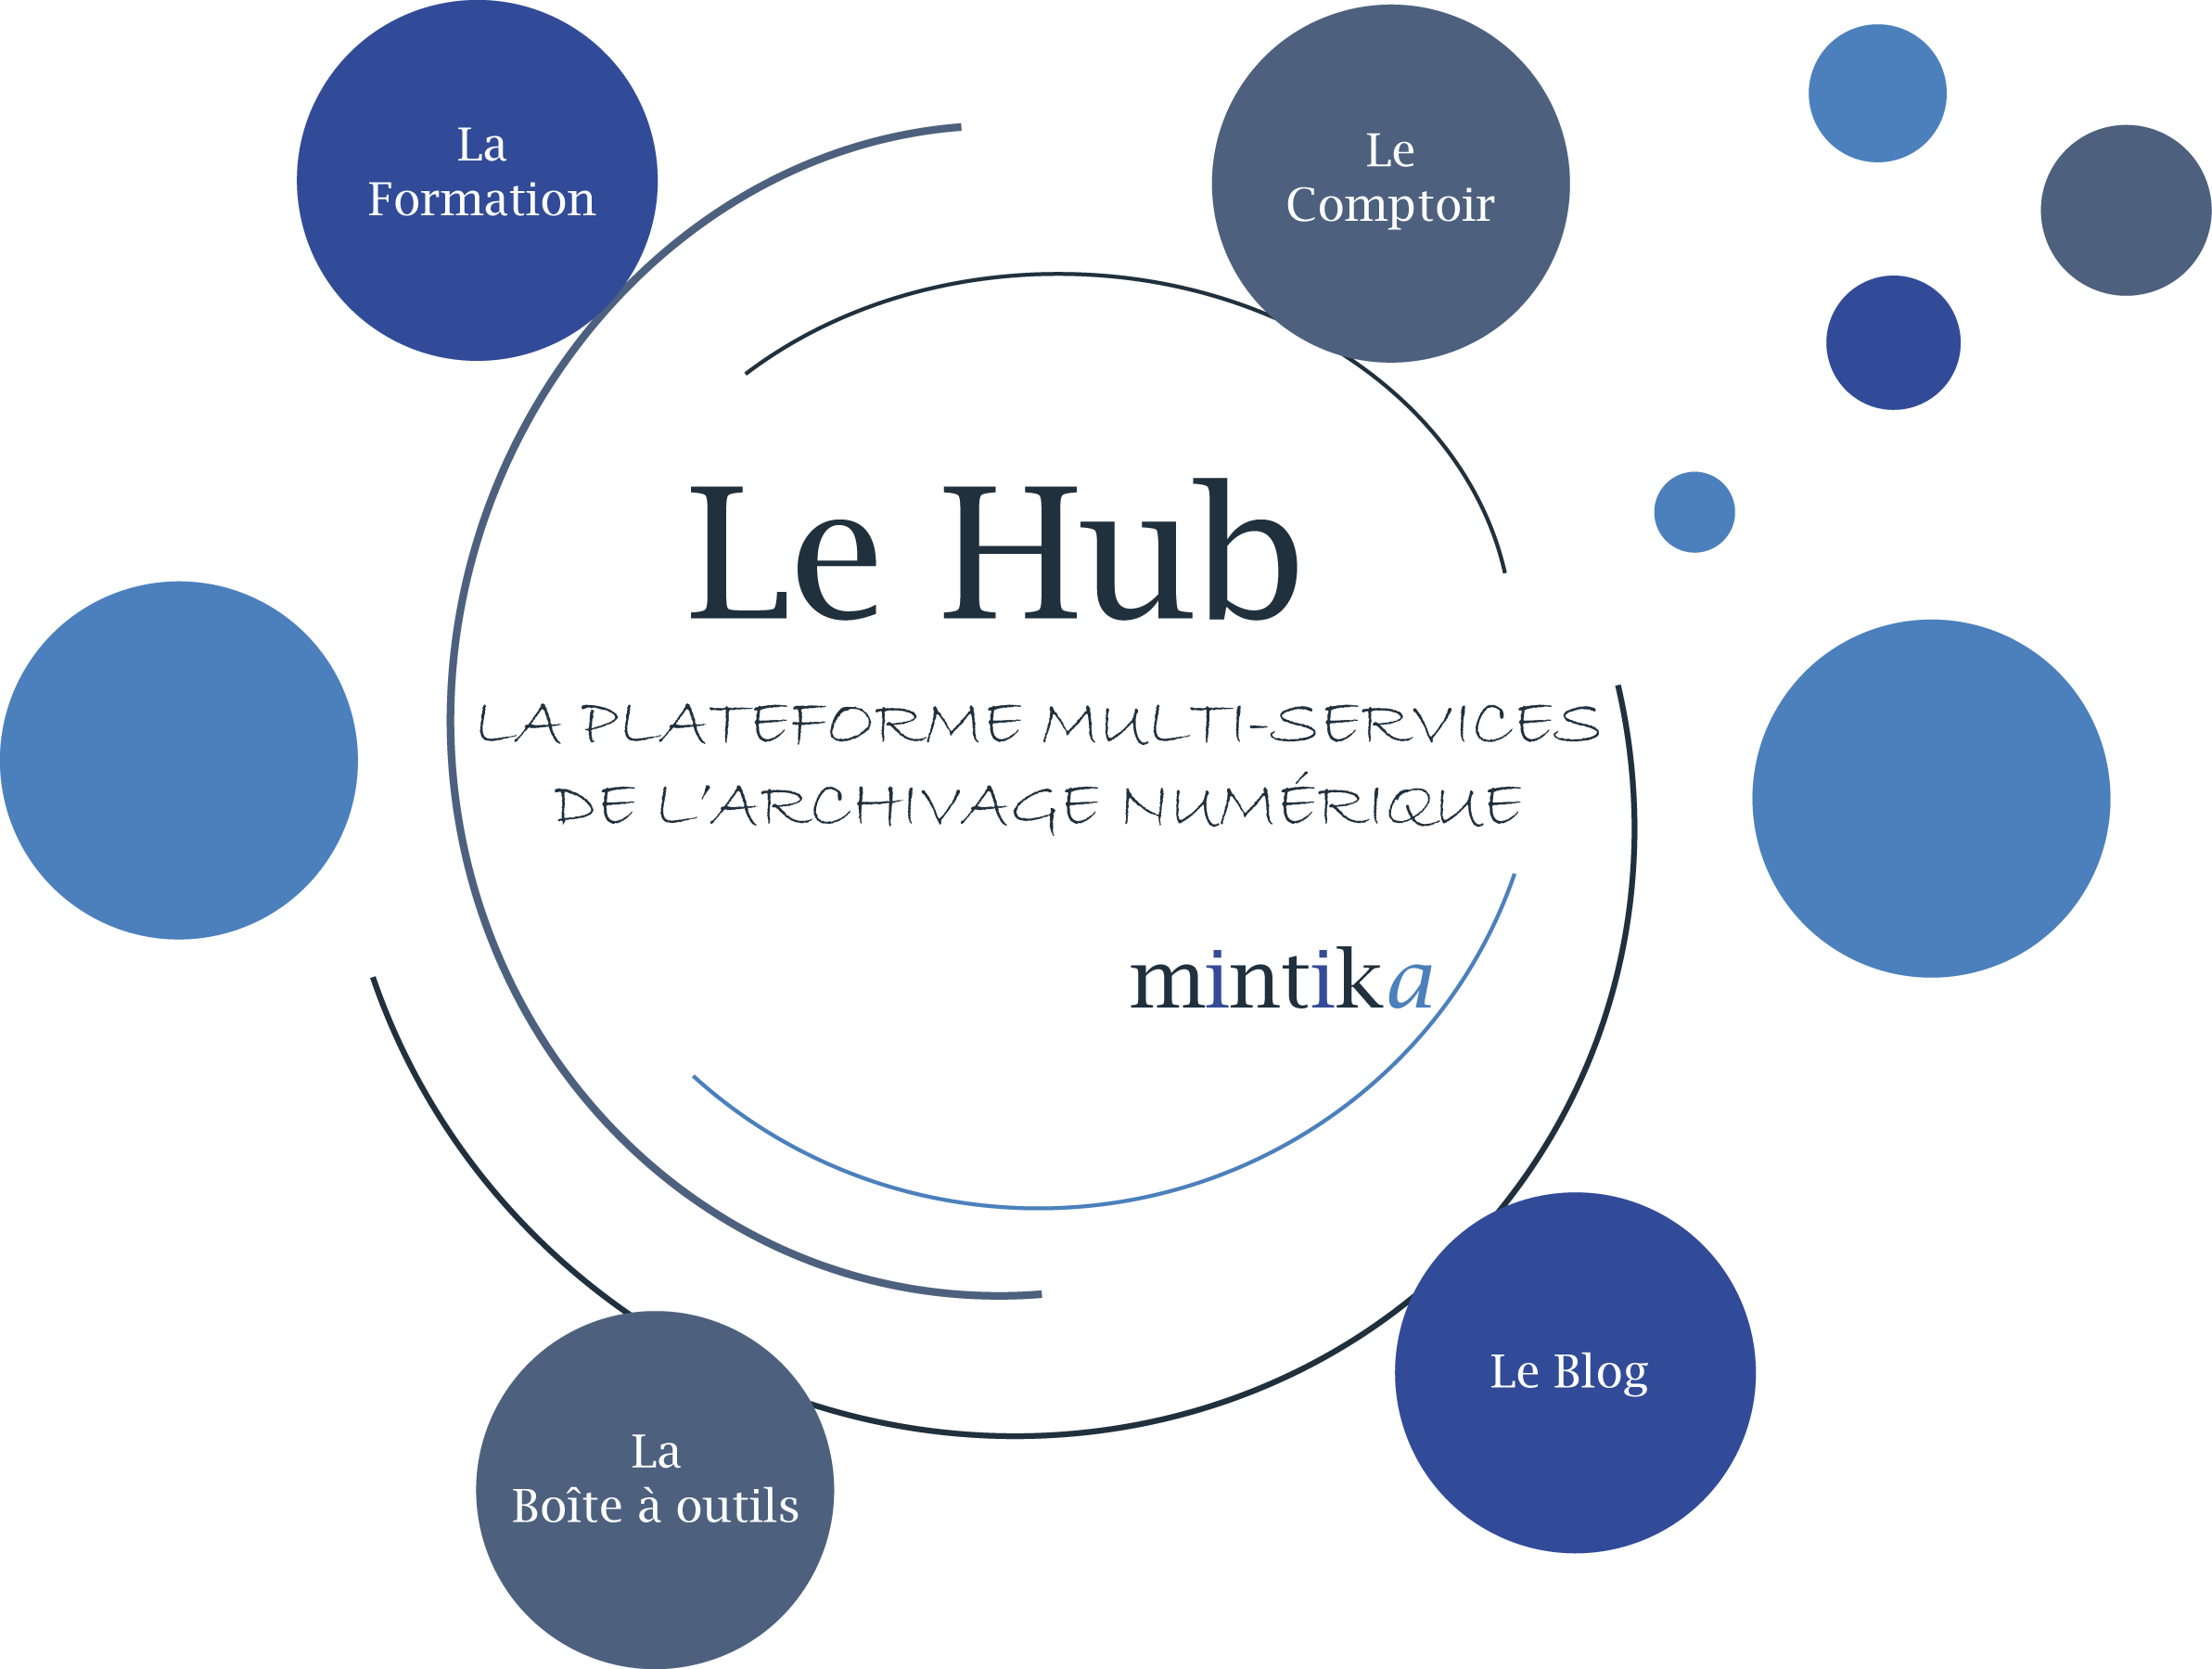 le Hub by mintika